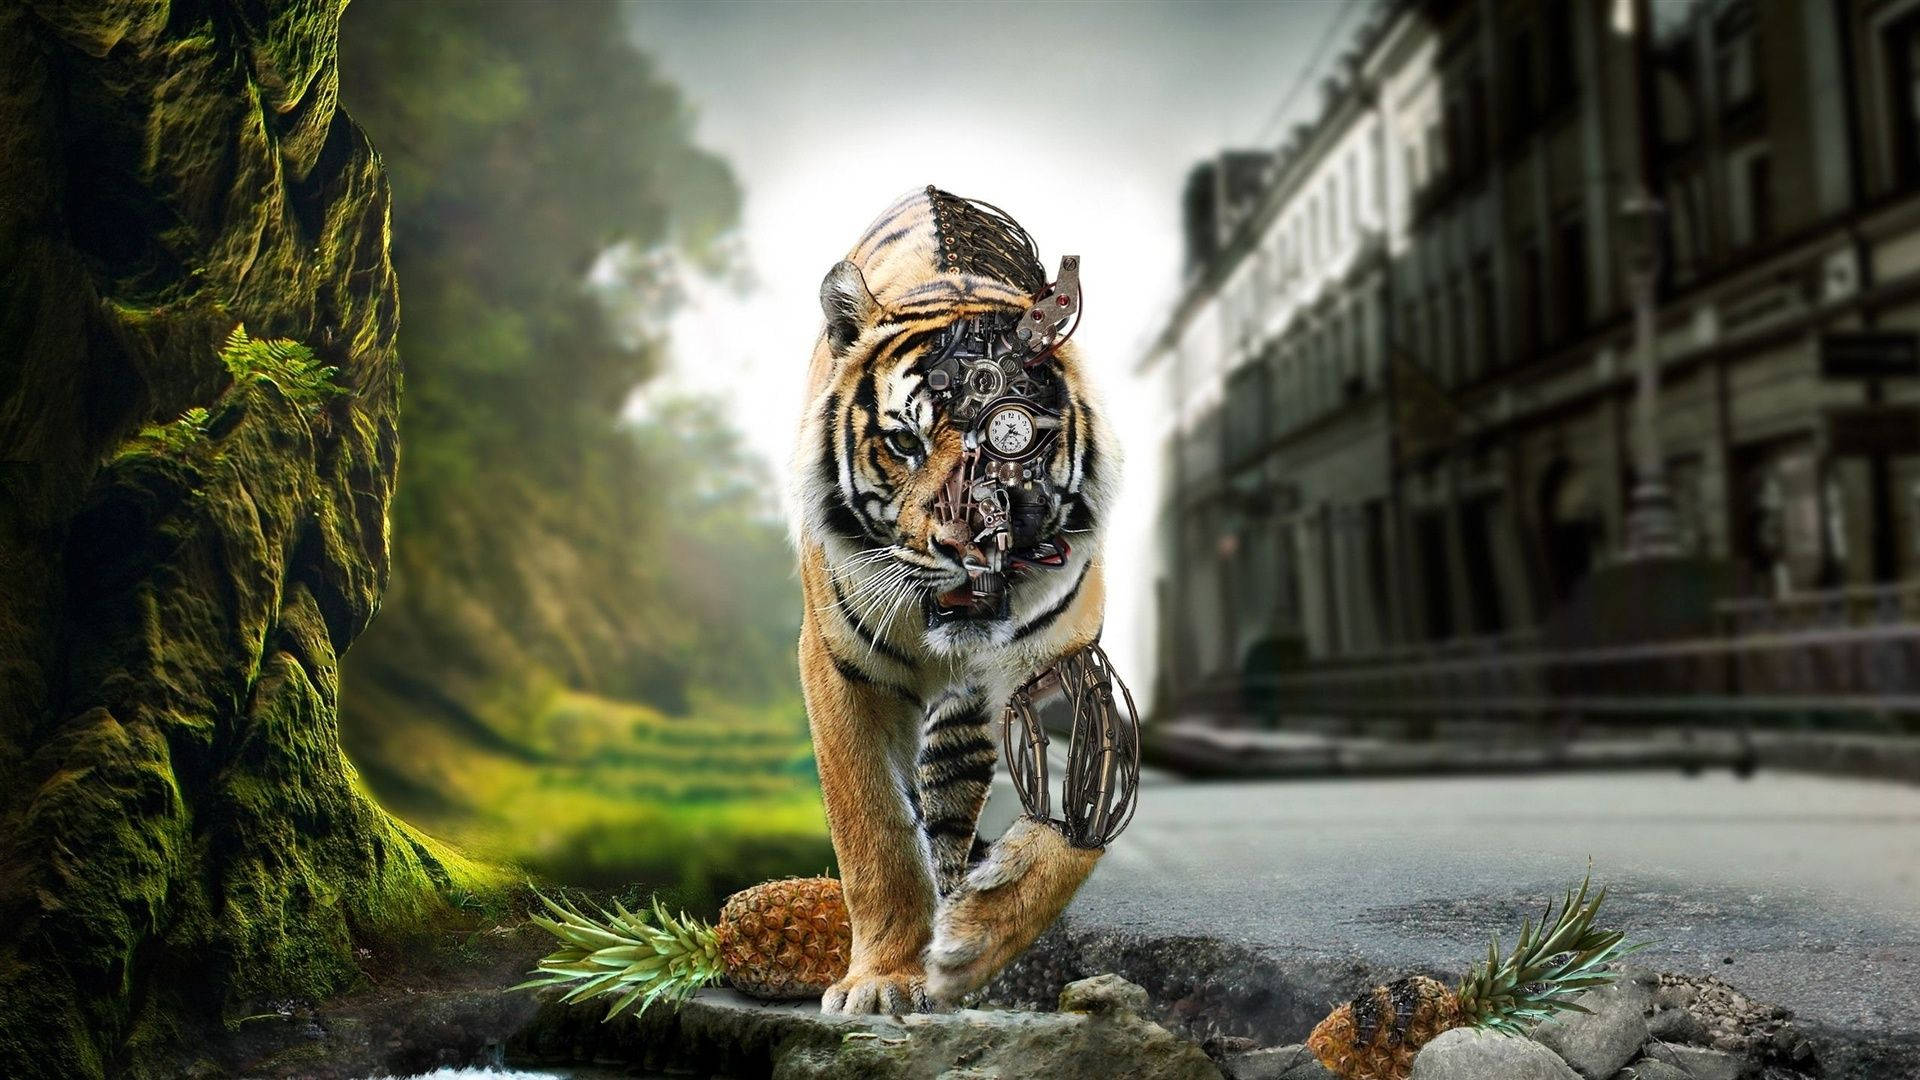 Download Tiger Nature And City Wallpaper 